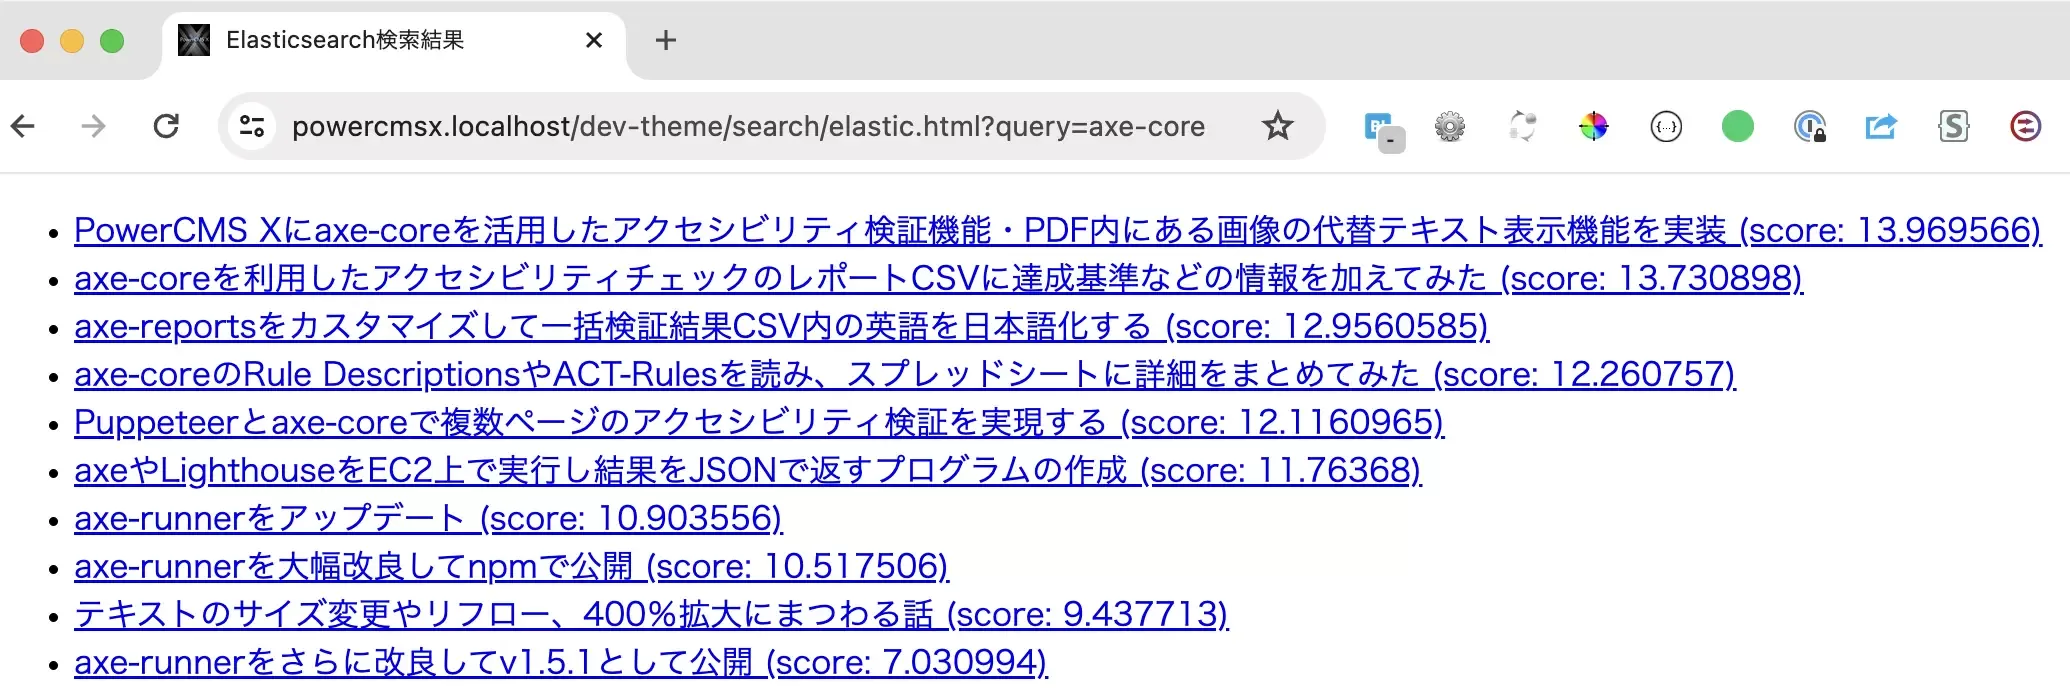 PowerCMS Xのビューを表示してElasticsearchの検索結果を表示した画面のキャプチャ